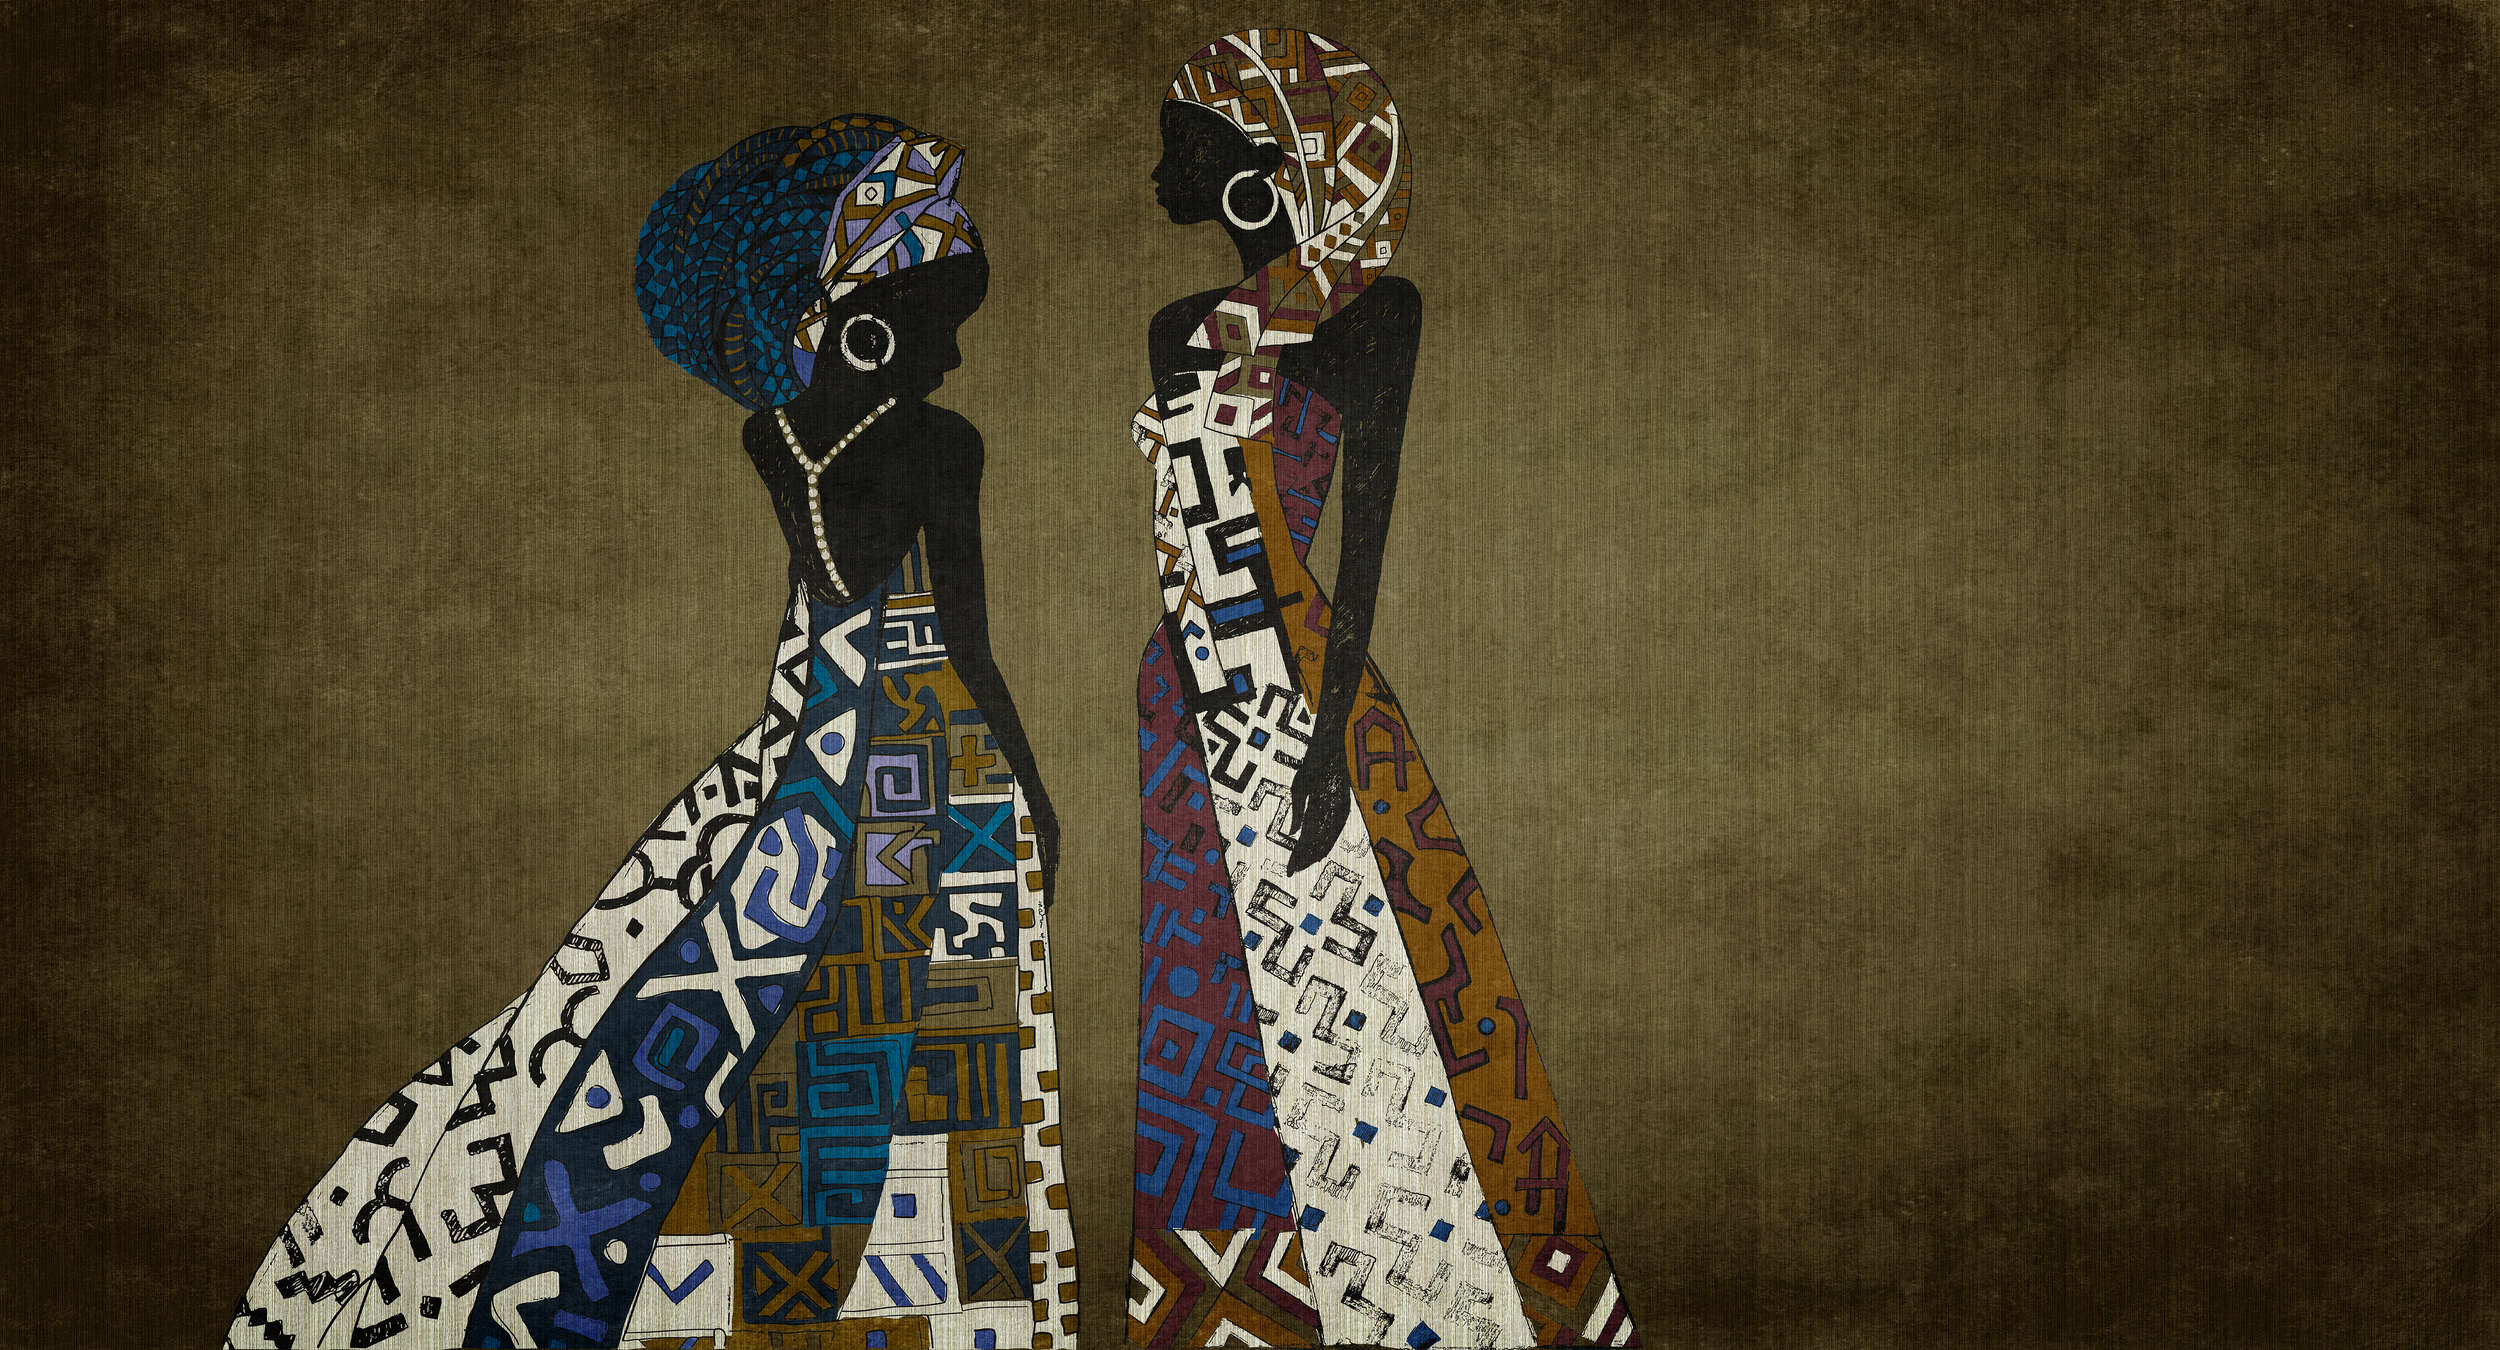             Nairobi 3 - Africa photo wallpaper dress design with ethnic pattern
        